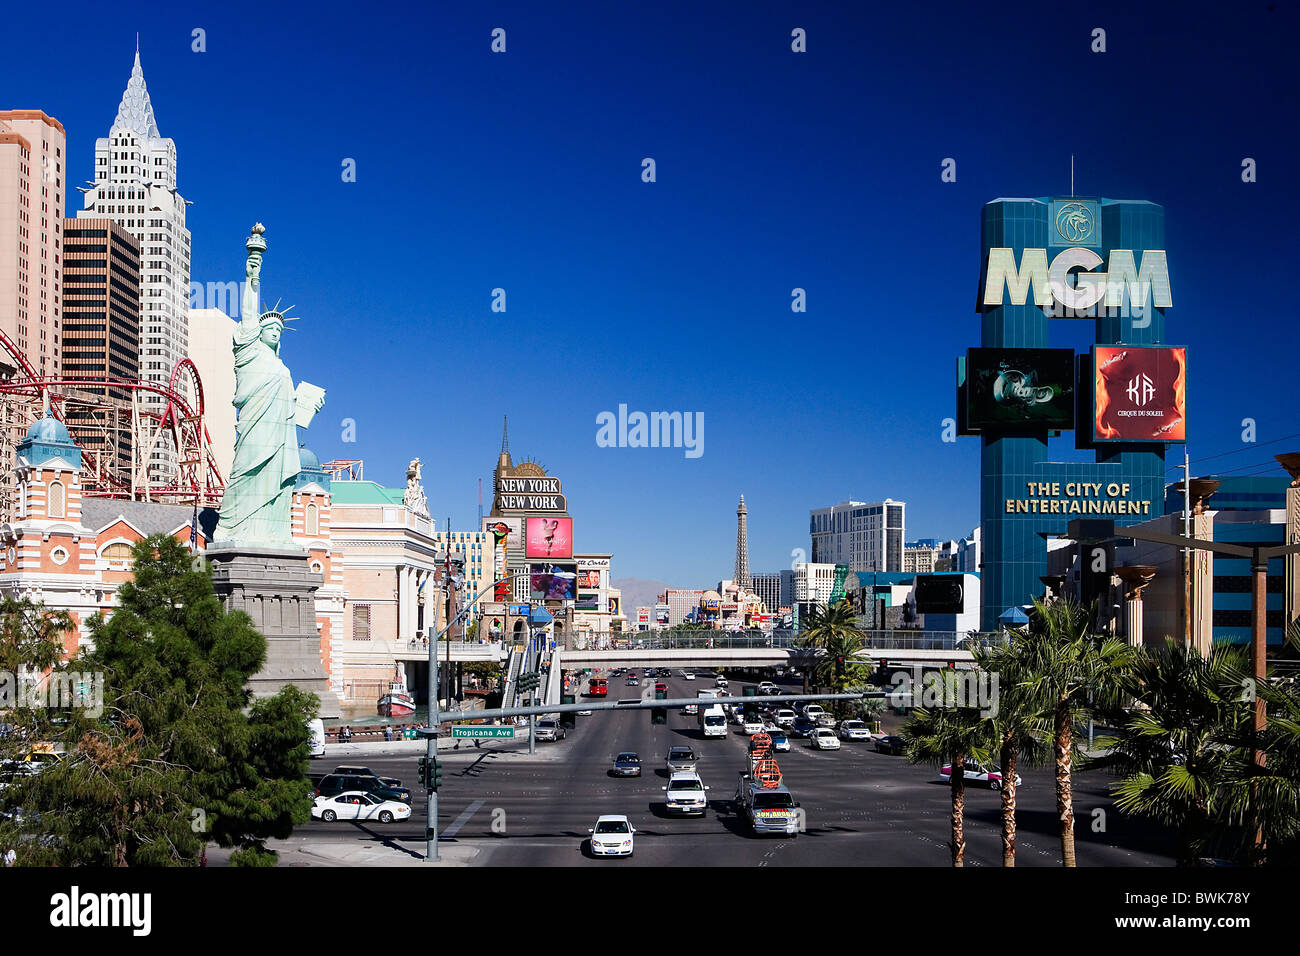 USA America United States North America Nevada Las Vegas town city Strip street casinos New York MGM repl Stock Photo